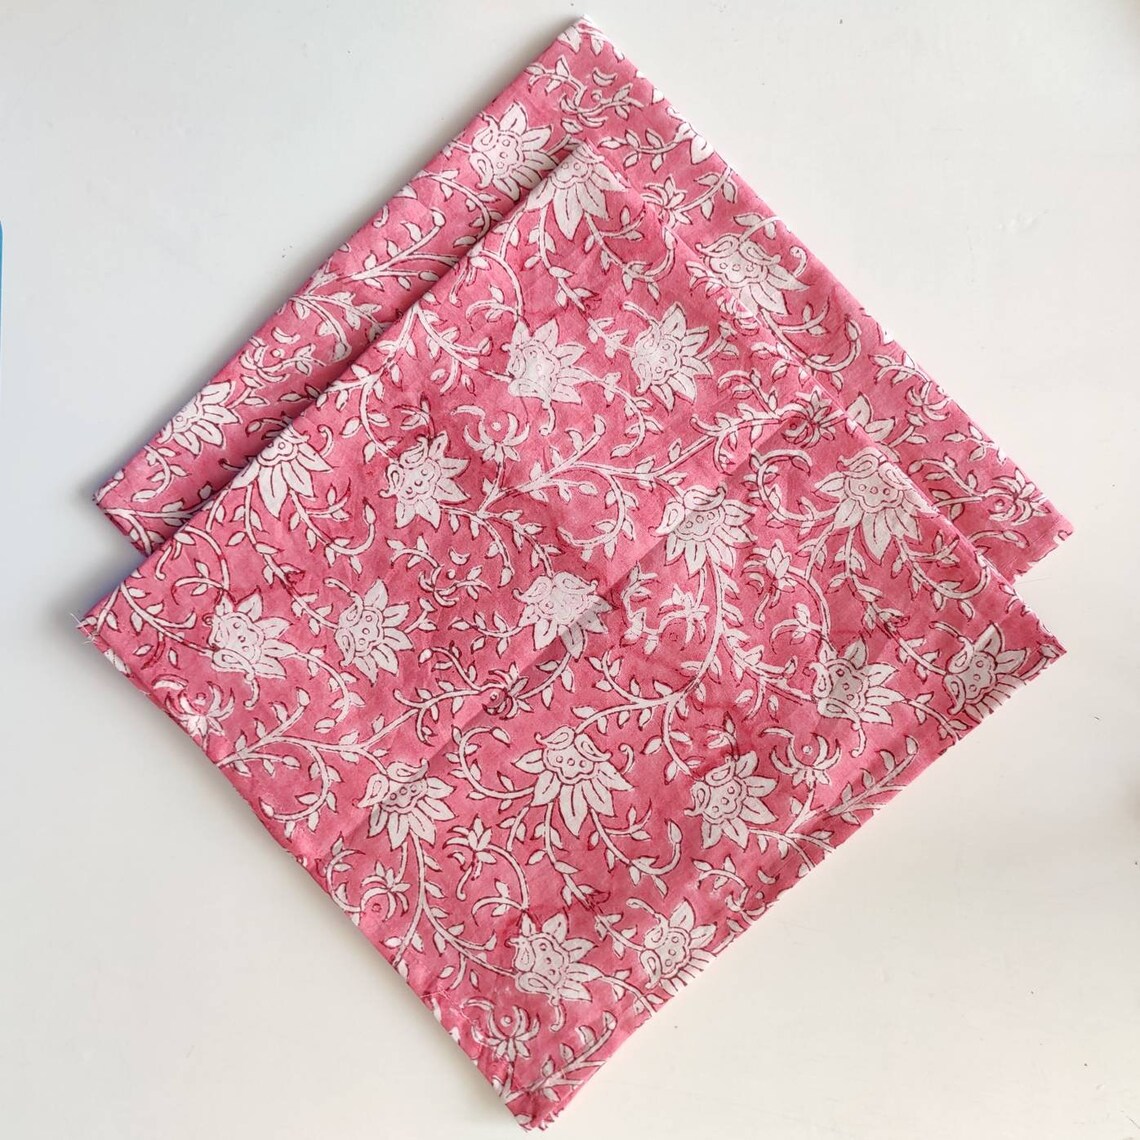 Indian block printed Pink floral napkins Indian Napkins | Etsy